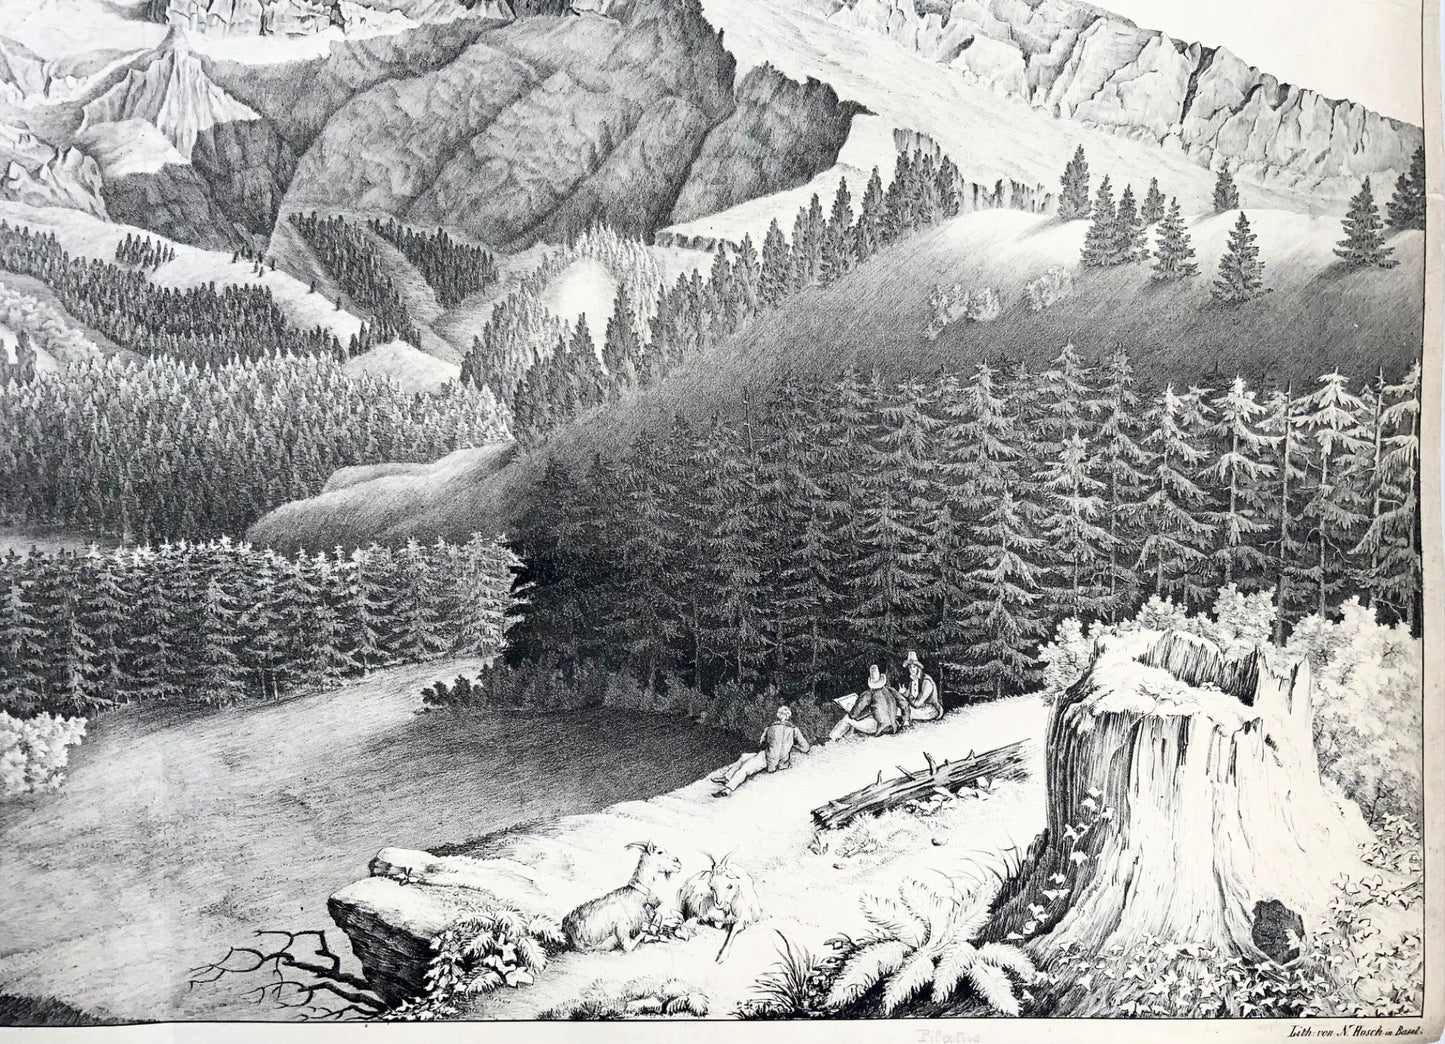 1836 Pilatus, panorama alpin, G. Hoffmann, immense lithographie en pierre, Suisse